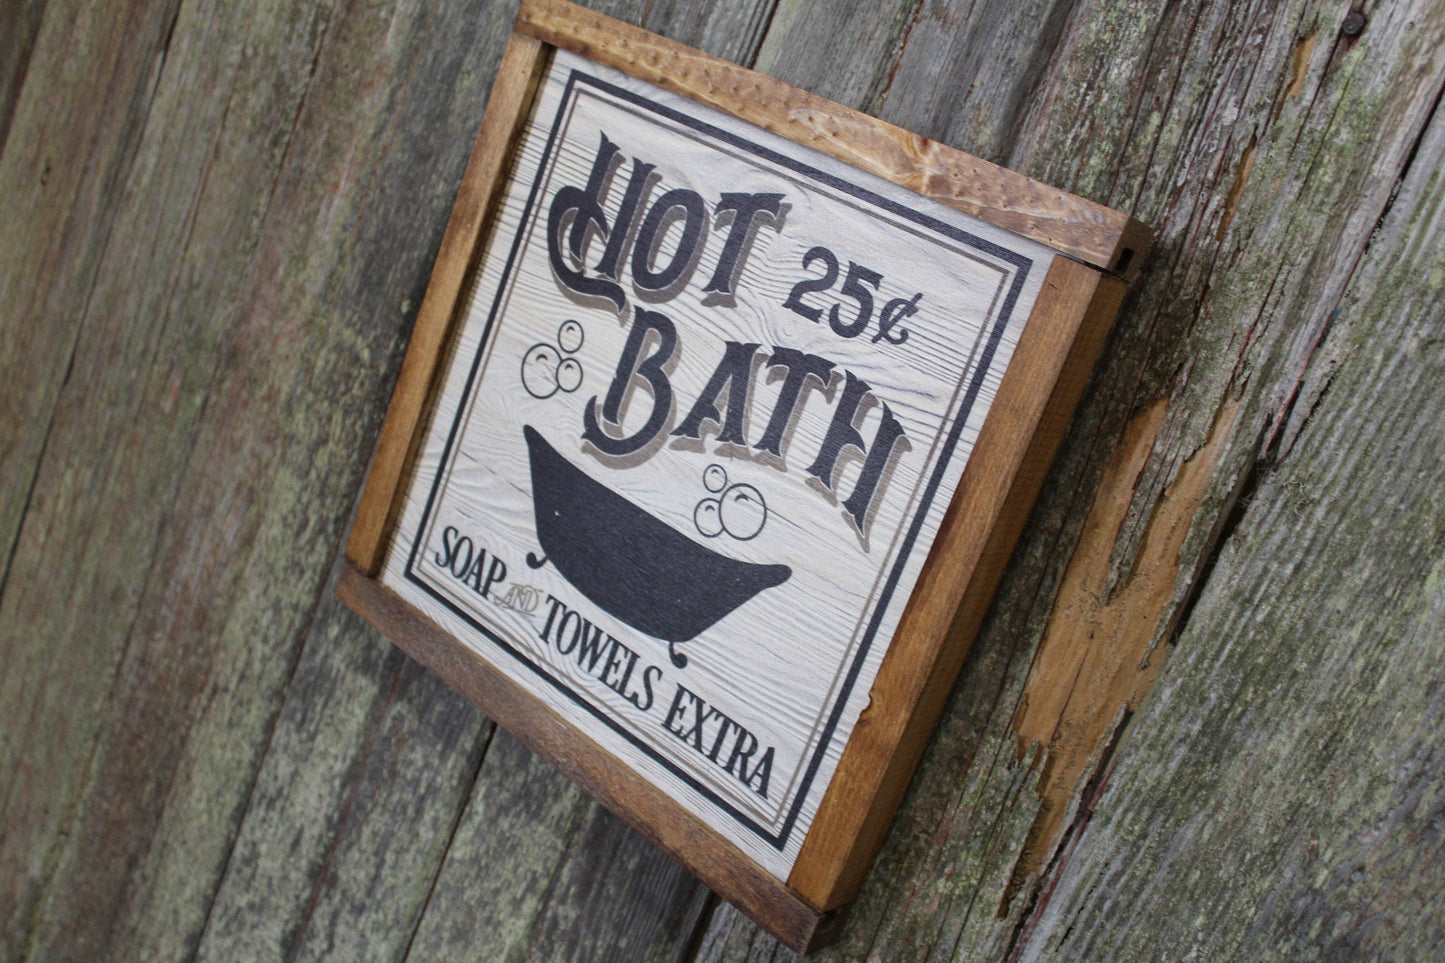 Hot Bath Bathroom Wood Sign Bathtub 25 Cents Soap and Towels Extra Décor Print Wall Art Decoration Wall Hanging Farmhouse Rustic Shiplap